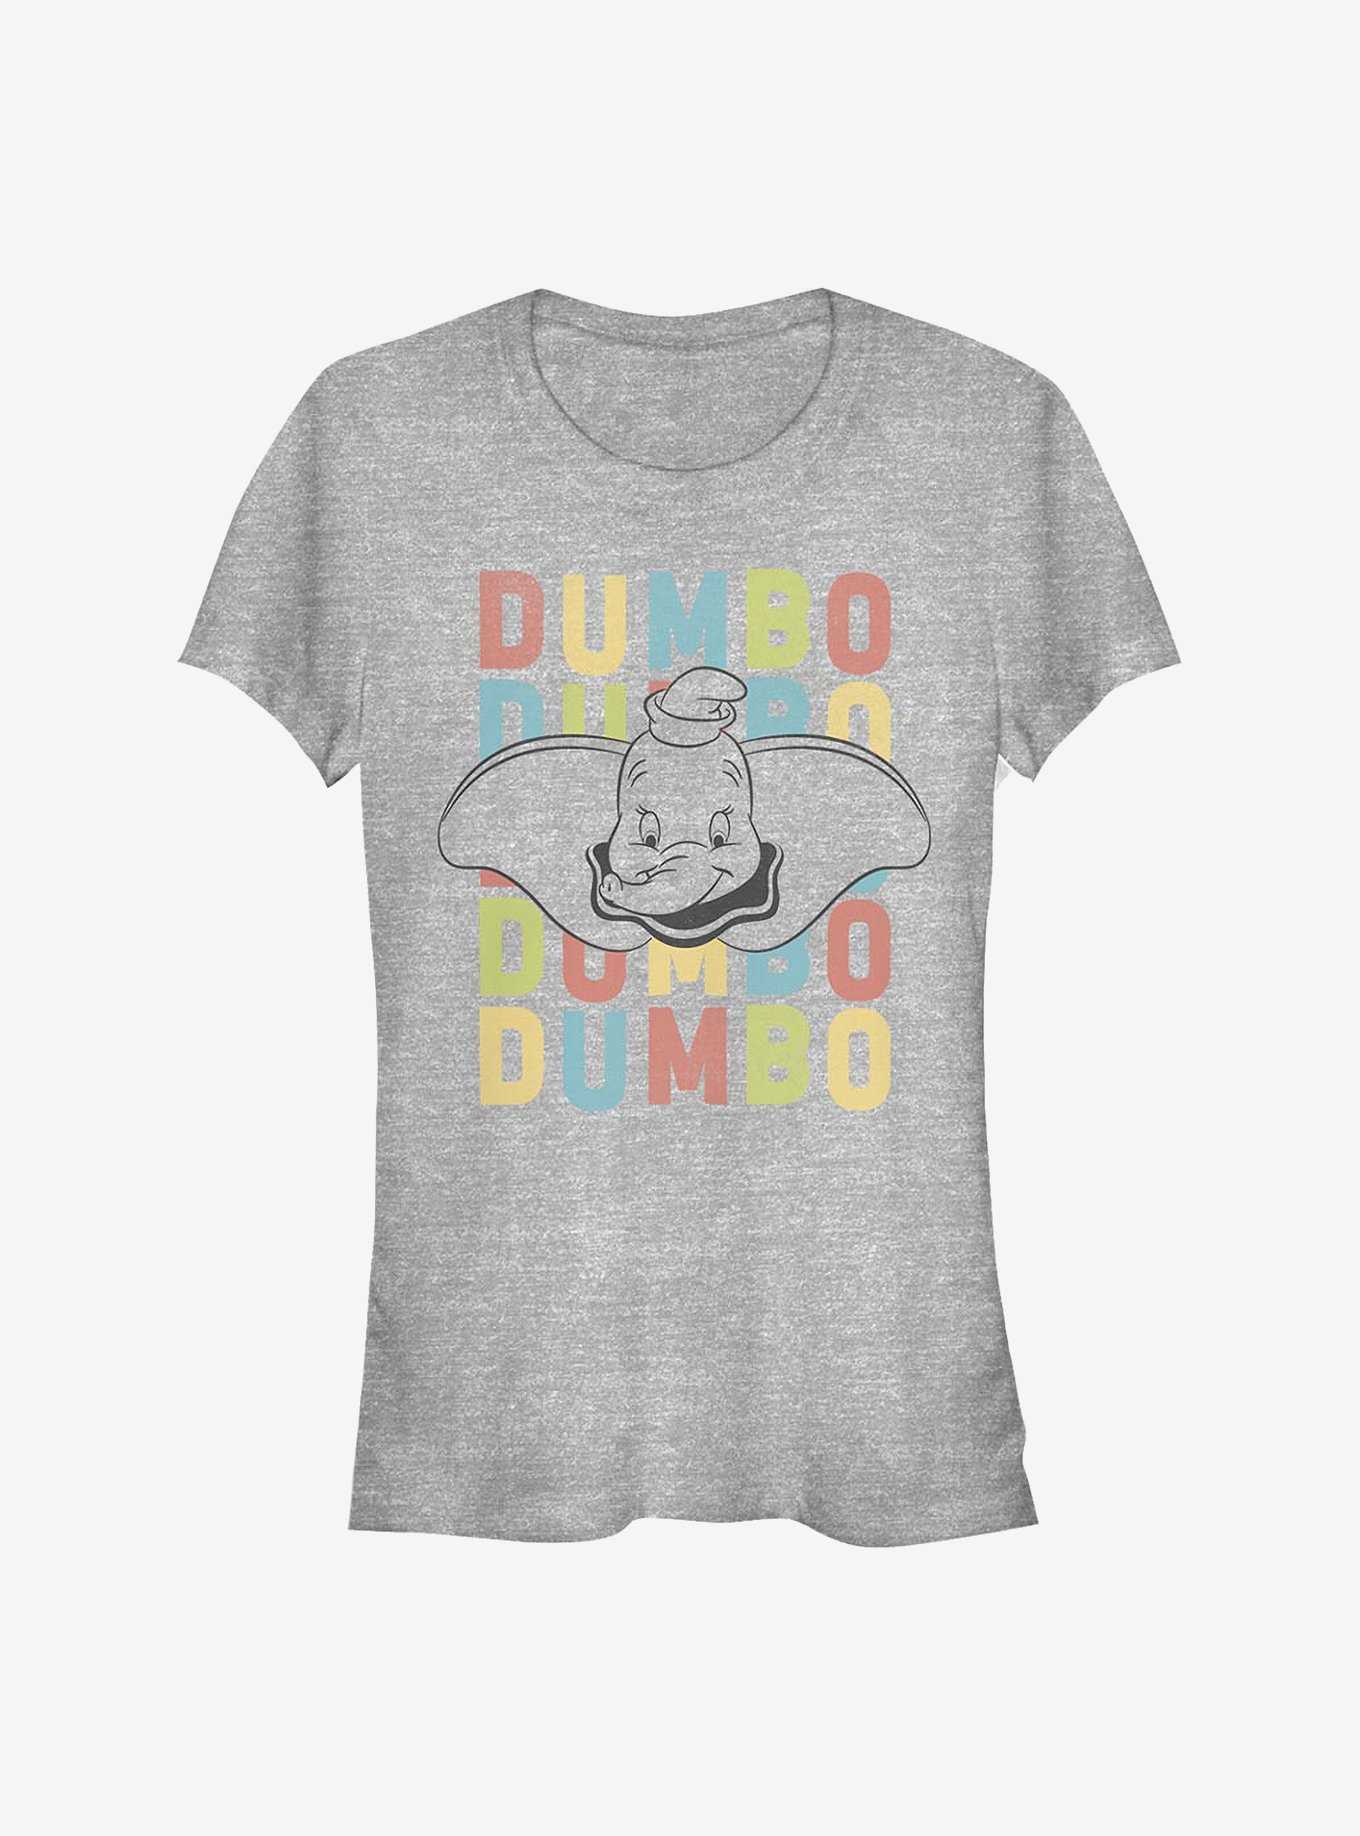 Disney Dumbo Face Girls T-Shirt, , hi-res